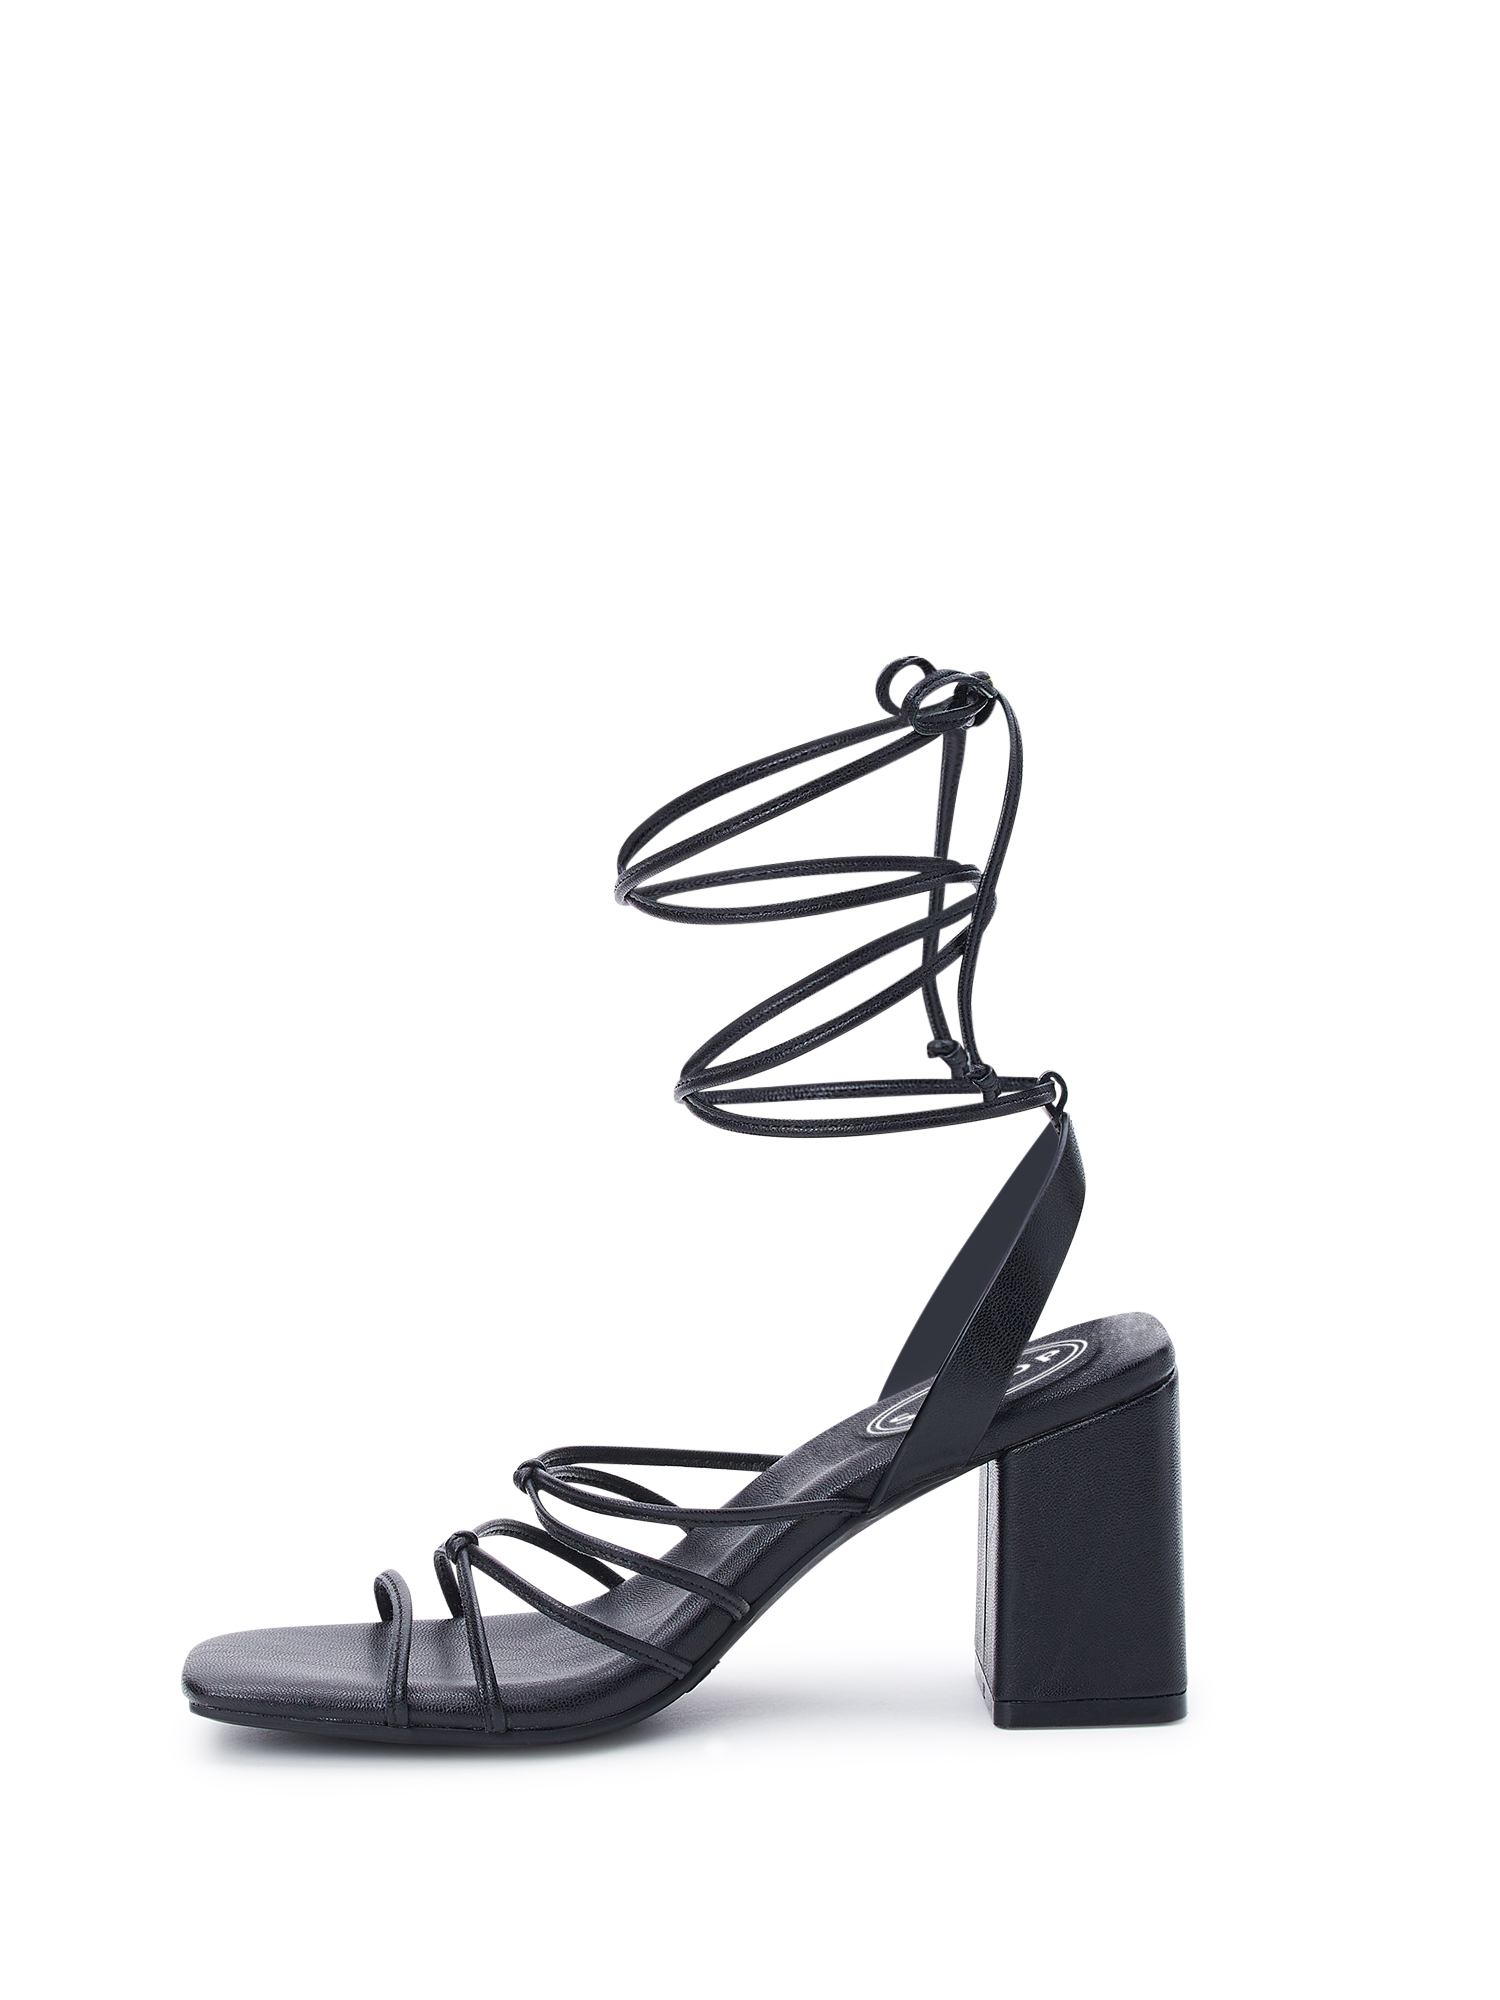 Black Cross Strap Block Heel Sandal | Shoes | Block heels sandal, Sandals  heels, Black strappy heels